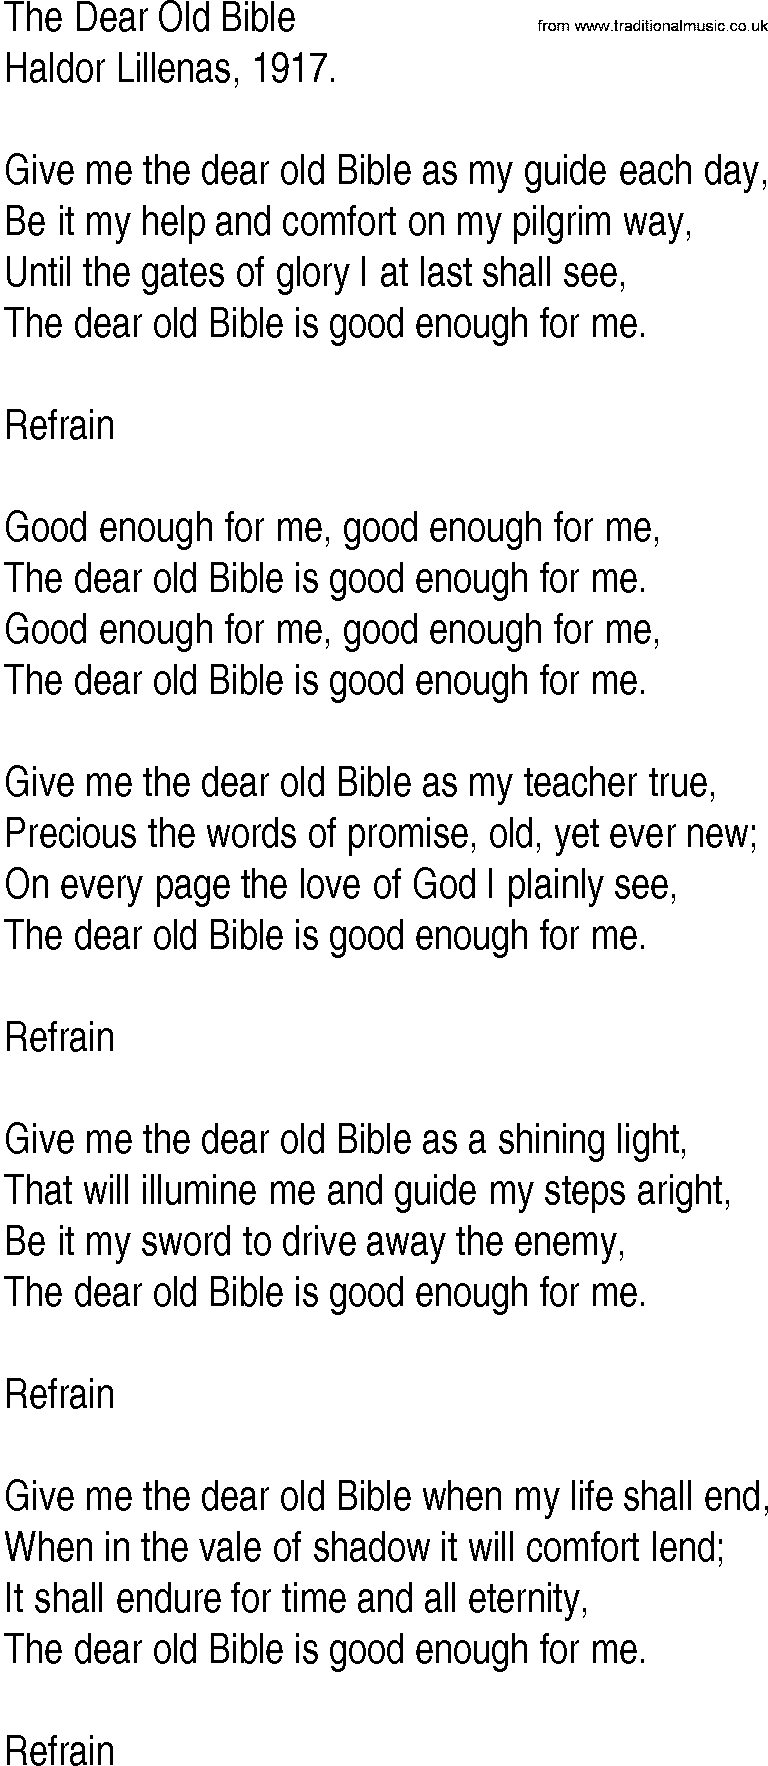 Hymn and Gospel Song: The Dear Old Bible by Haldor Lillenas lyrics